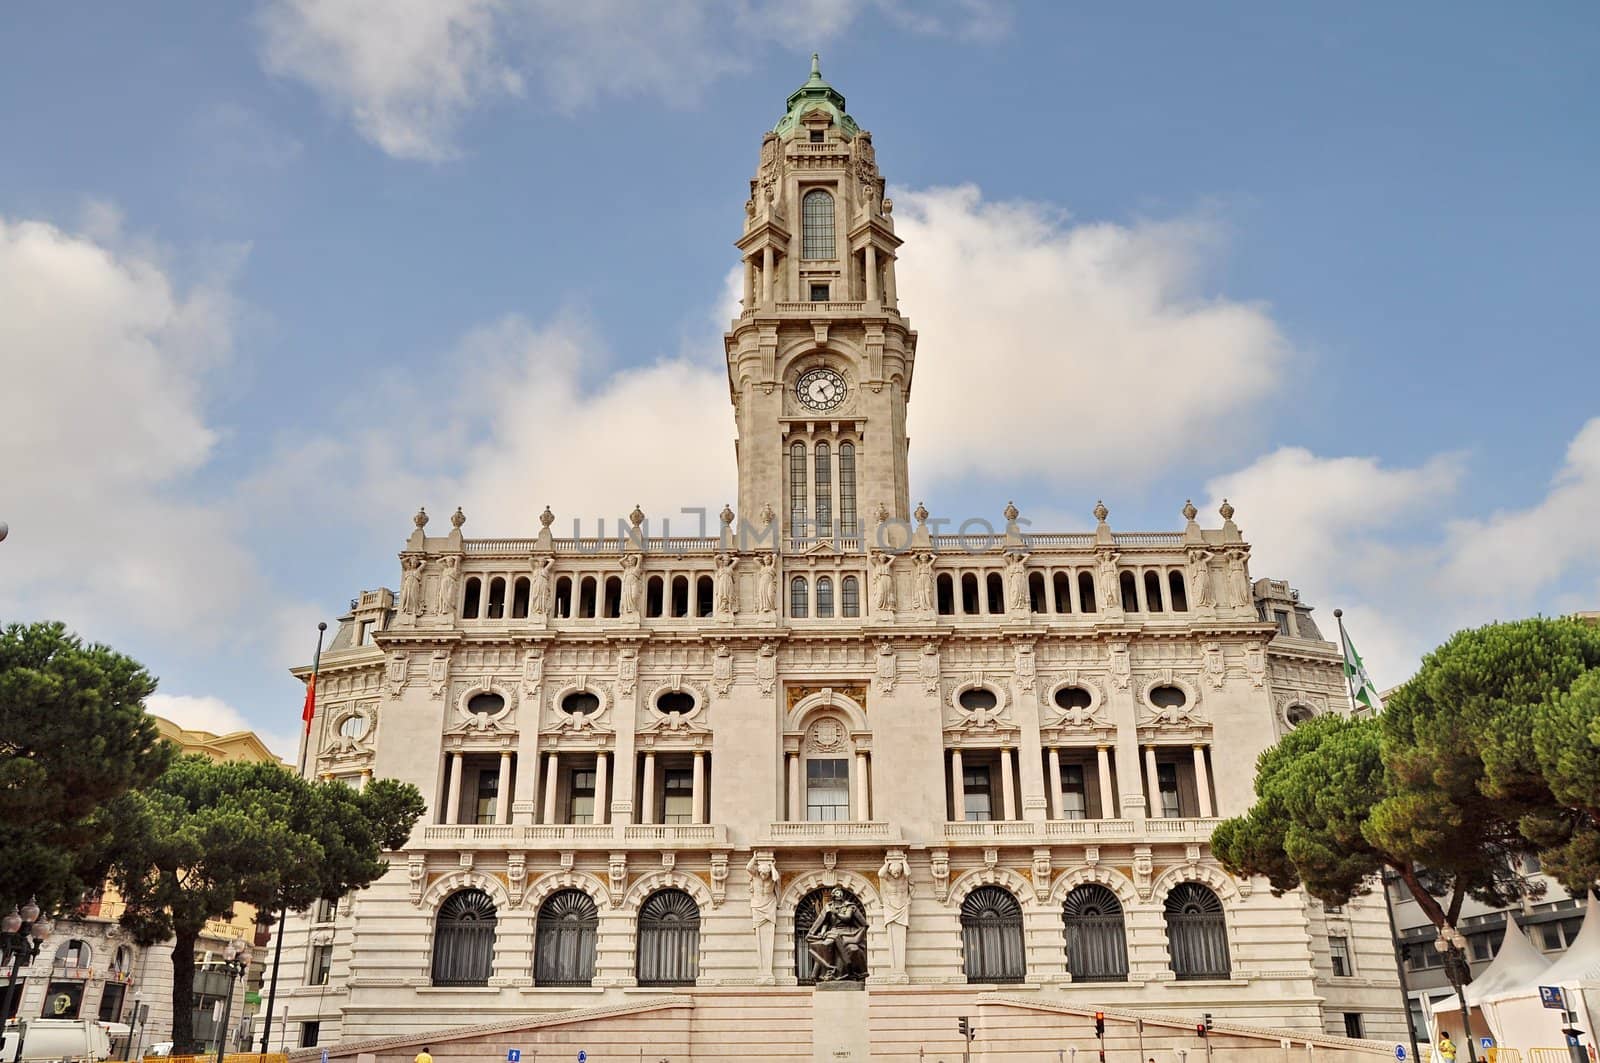 City hall of Porto, Portugal by anderm